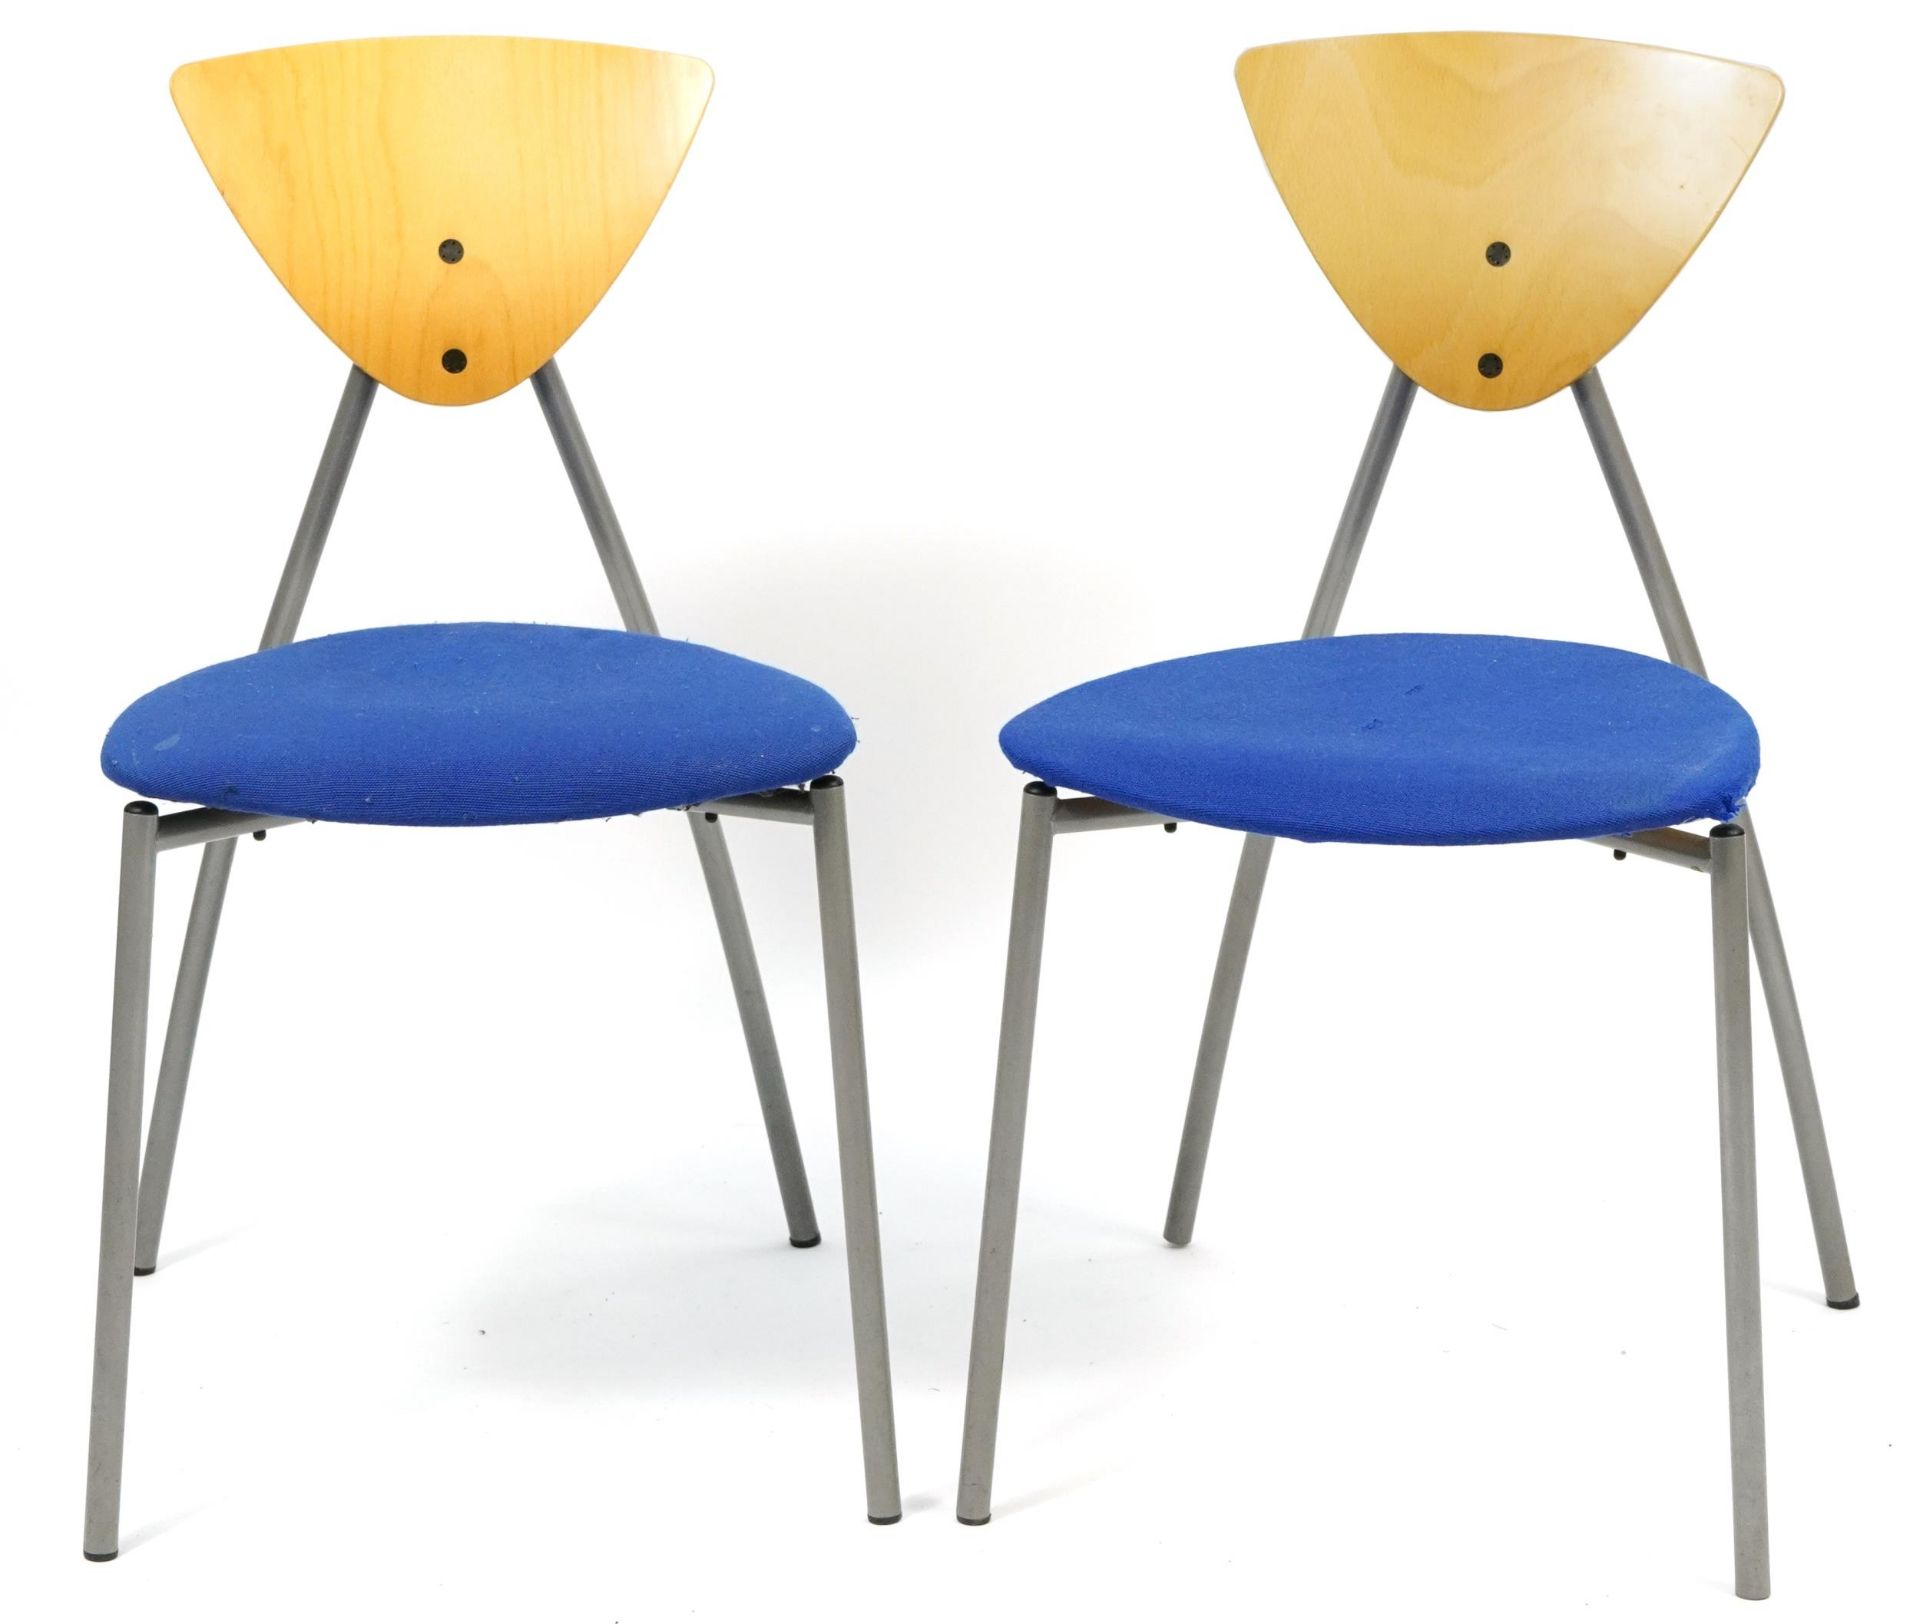 R Randers, Pair of Danish metal framed chairs, numbered 1999, 79.5cm high